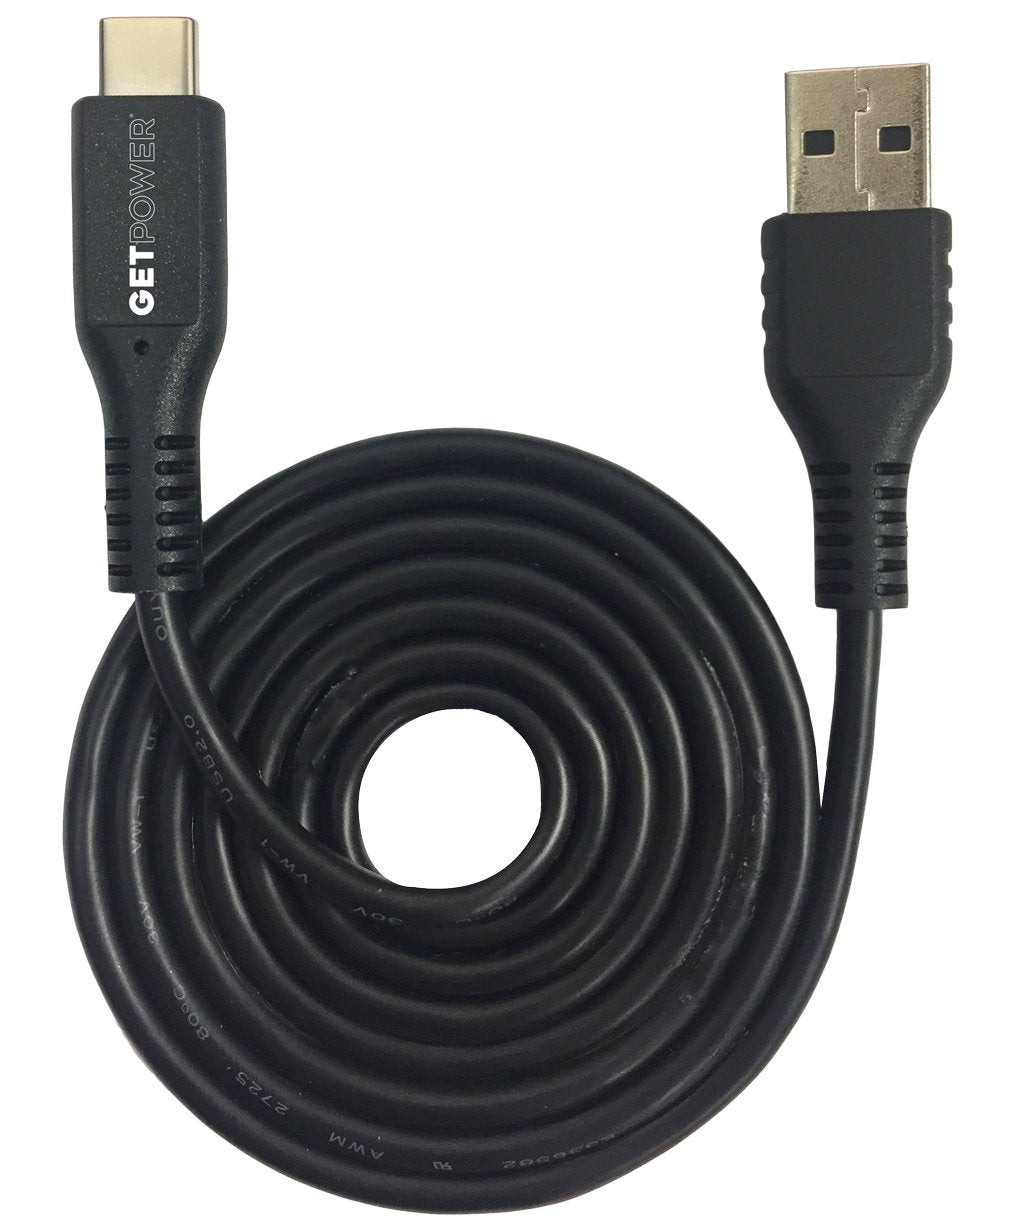 GetPower GP-USB-USBC Charge/Sync USB Cable, 3'